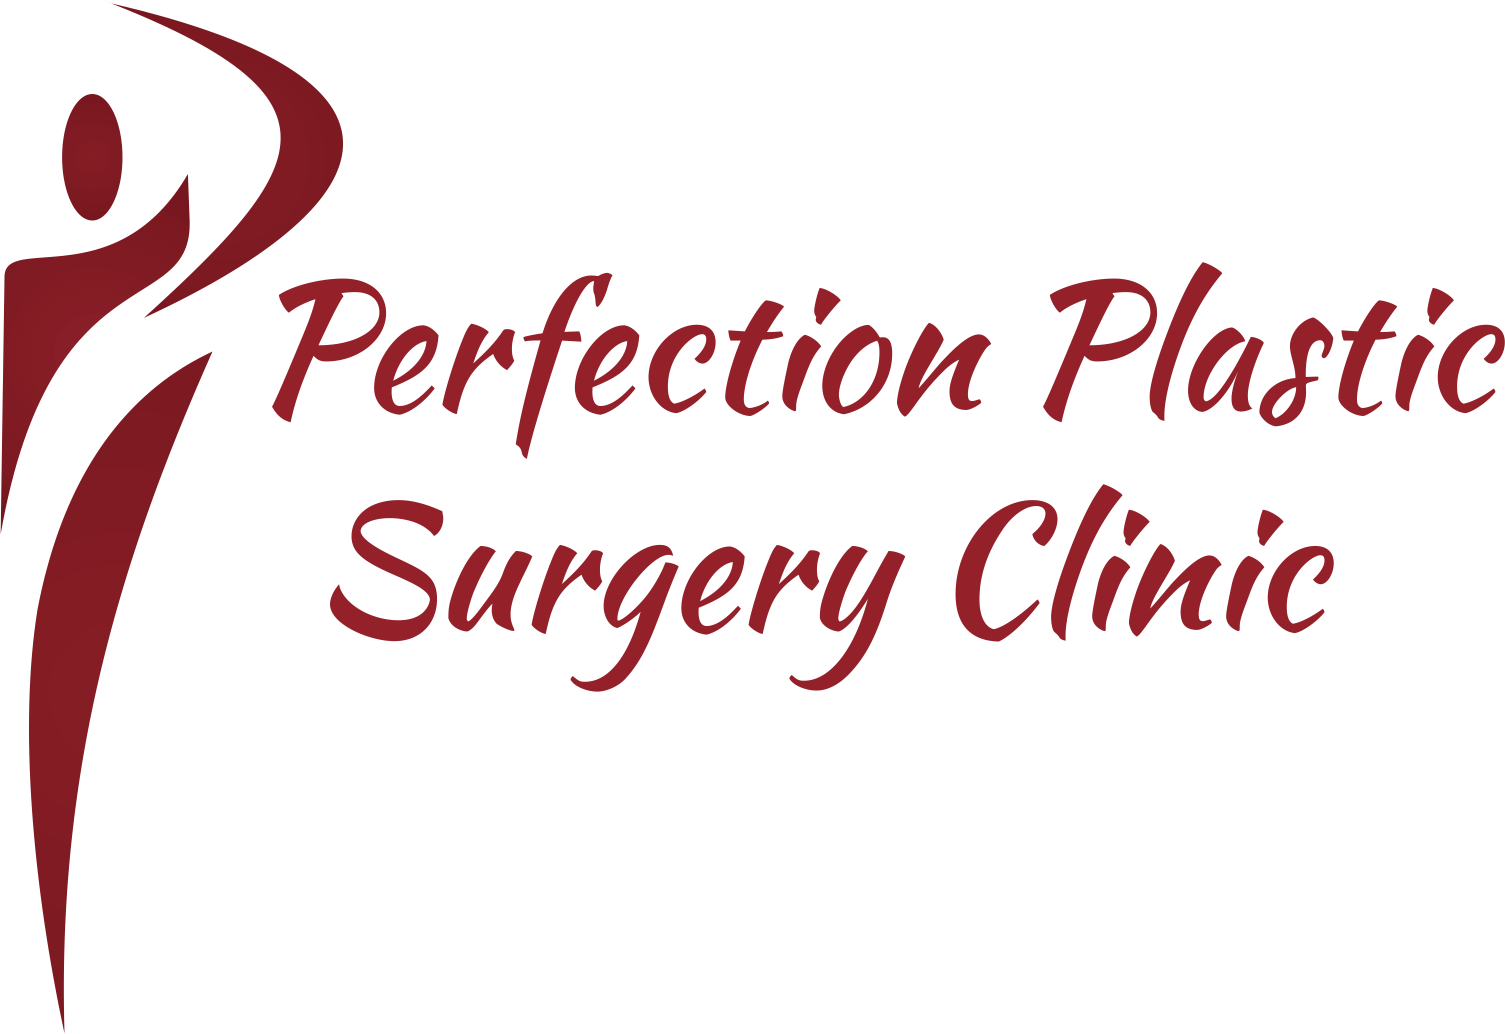 Perfection Plastic Surgery Clinic - Logo